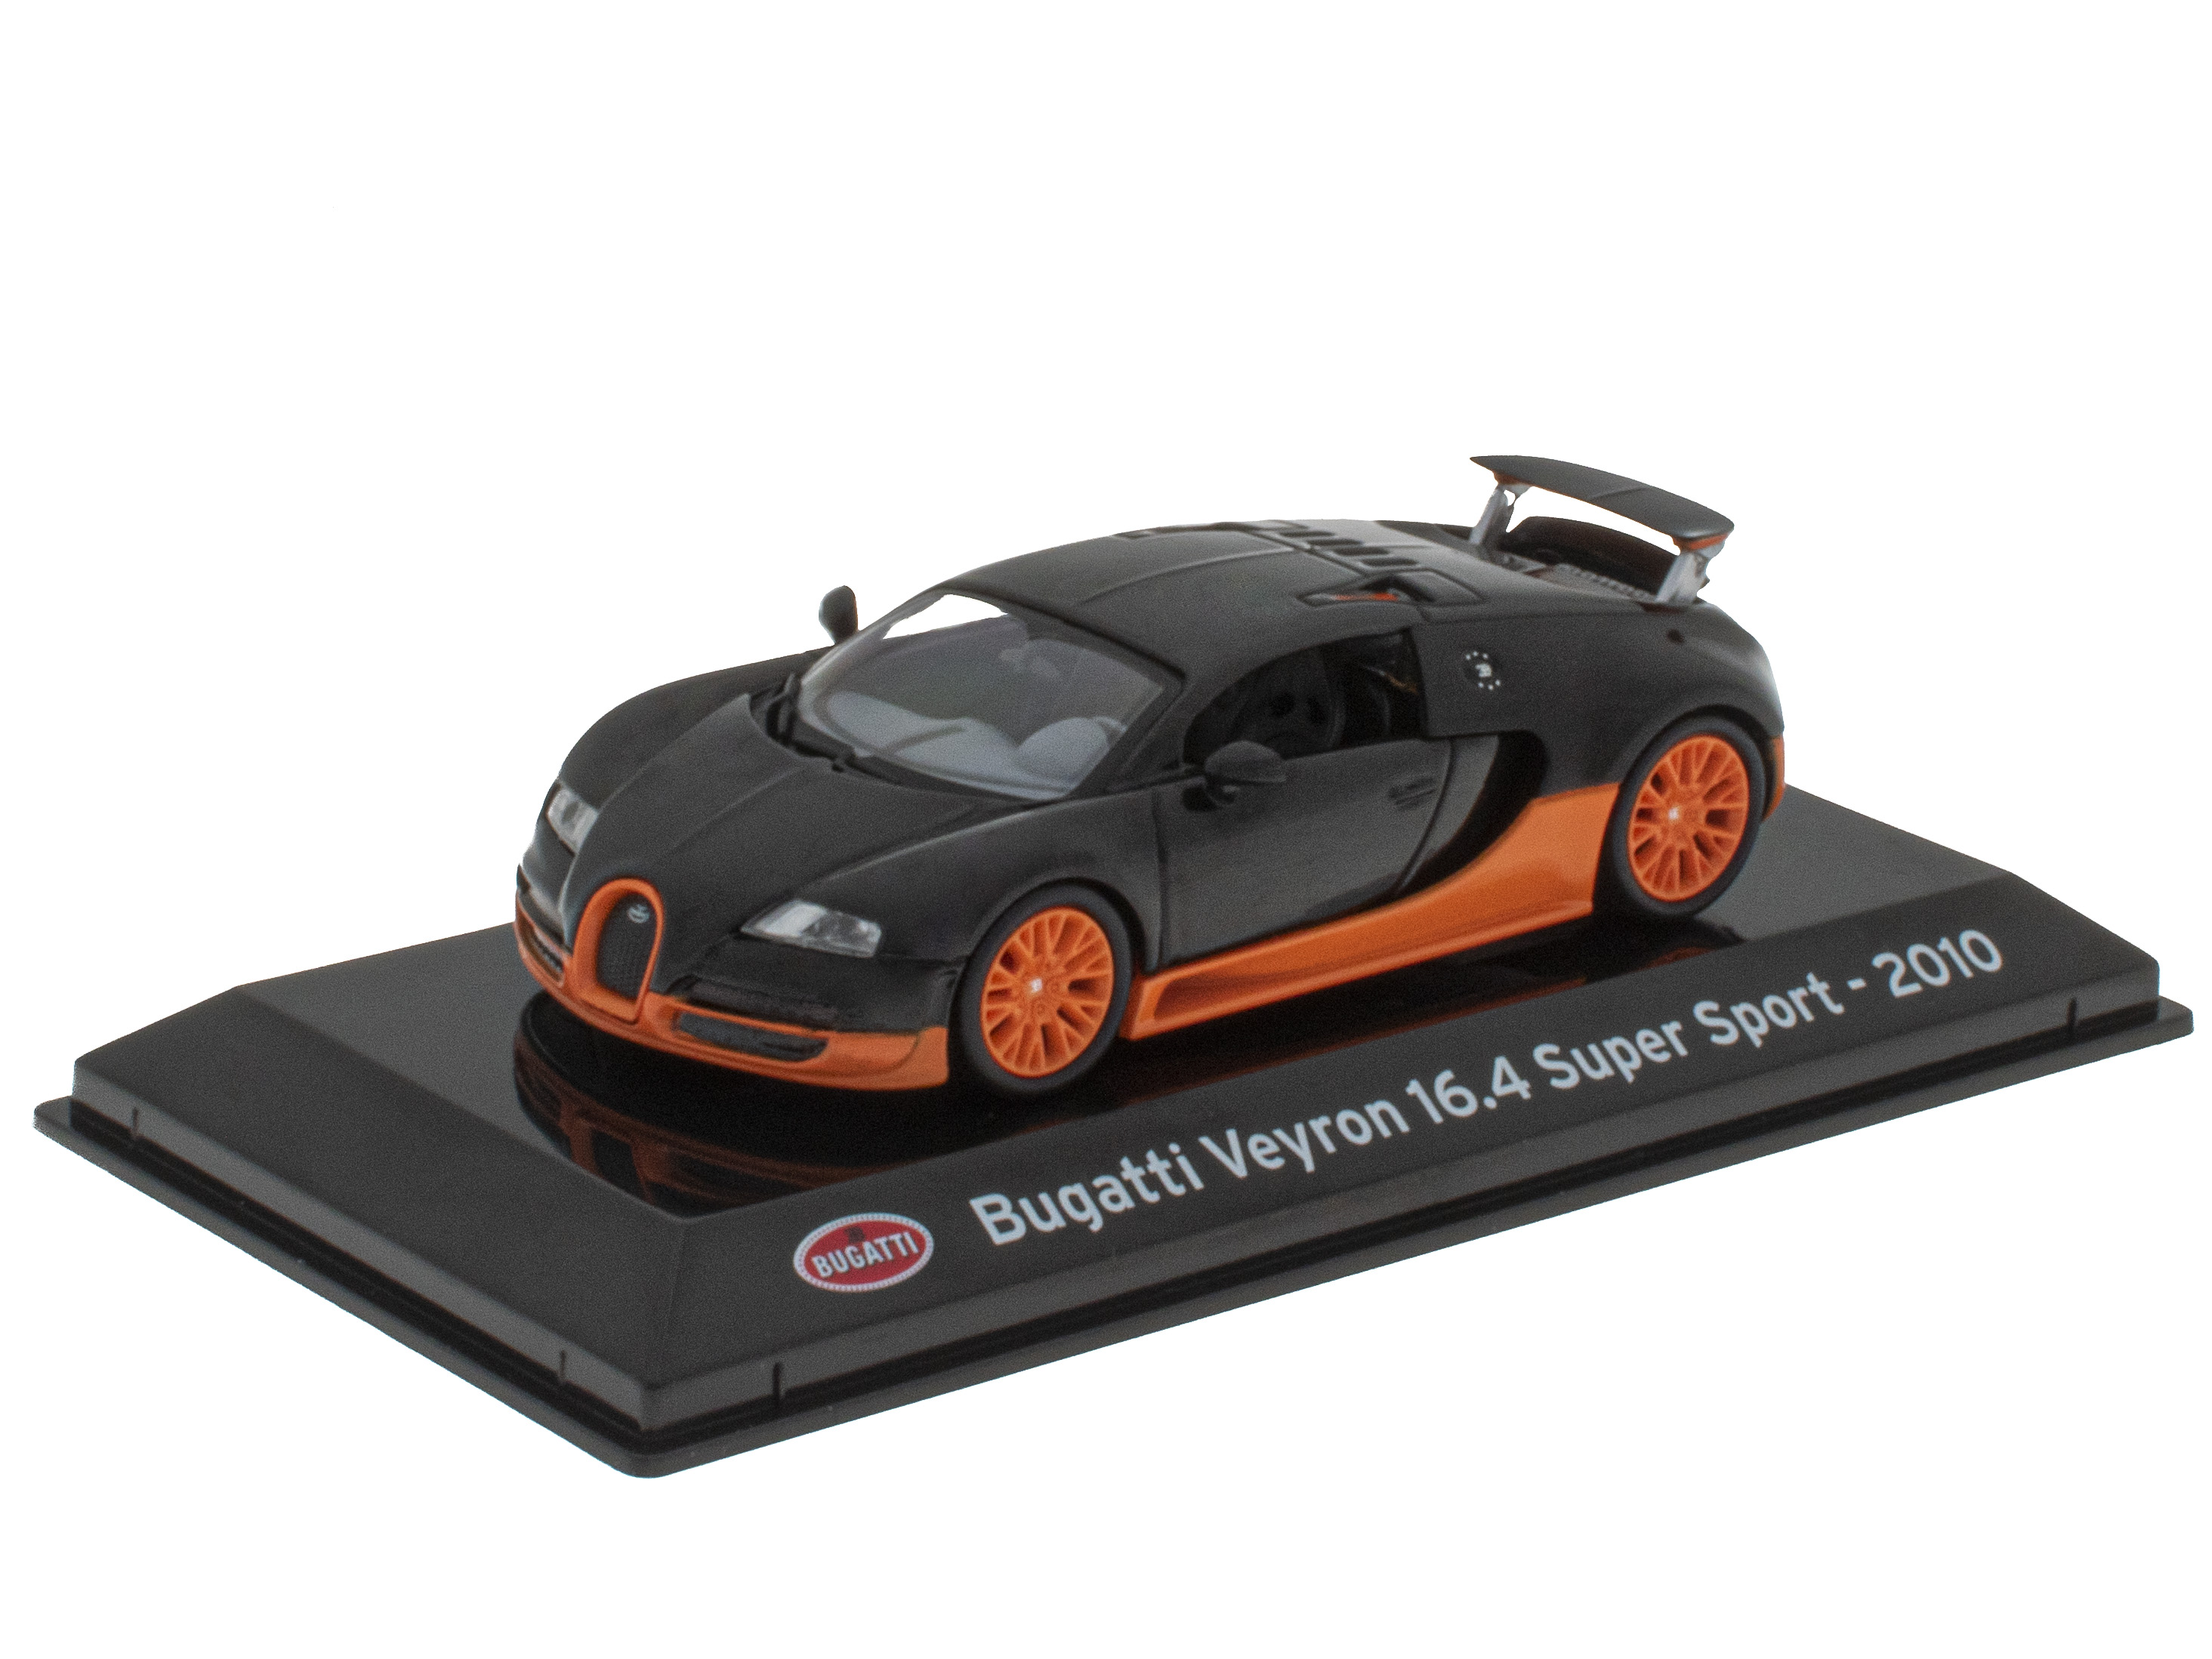 Bugatti Veyron 16.4 Super Sport - 2010